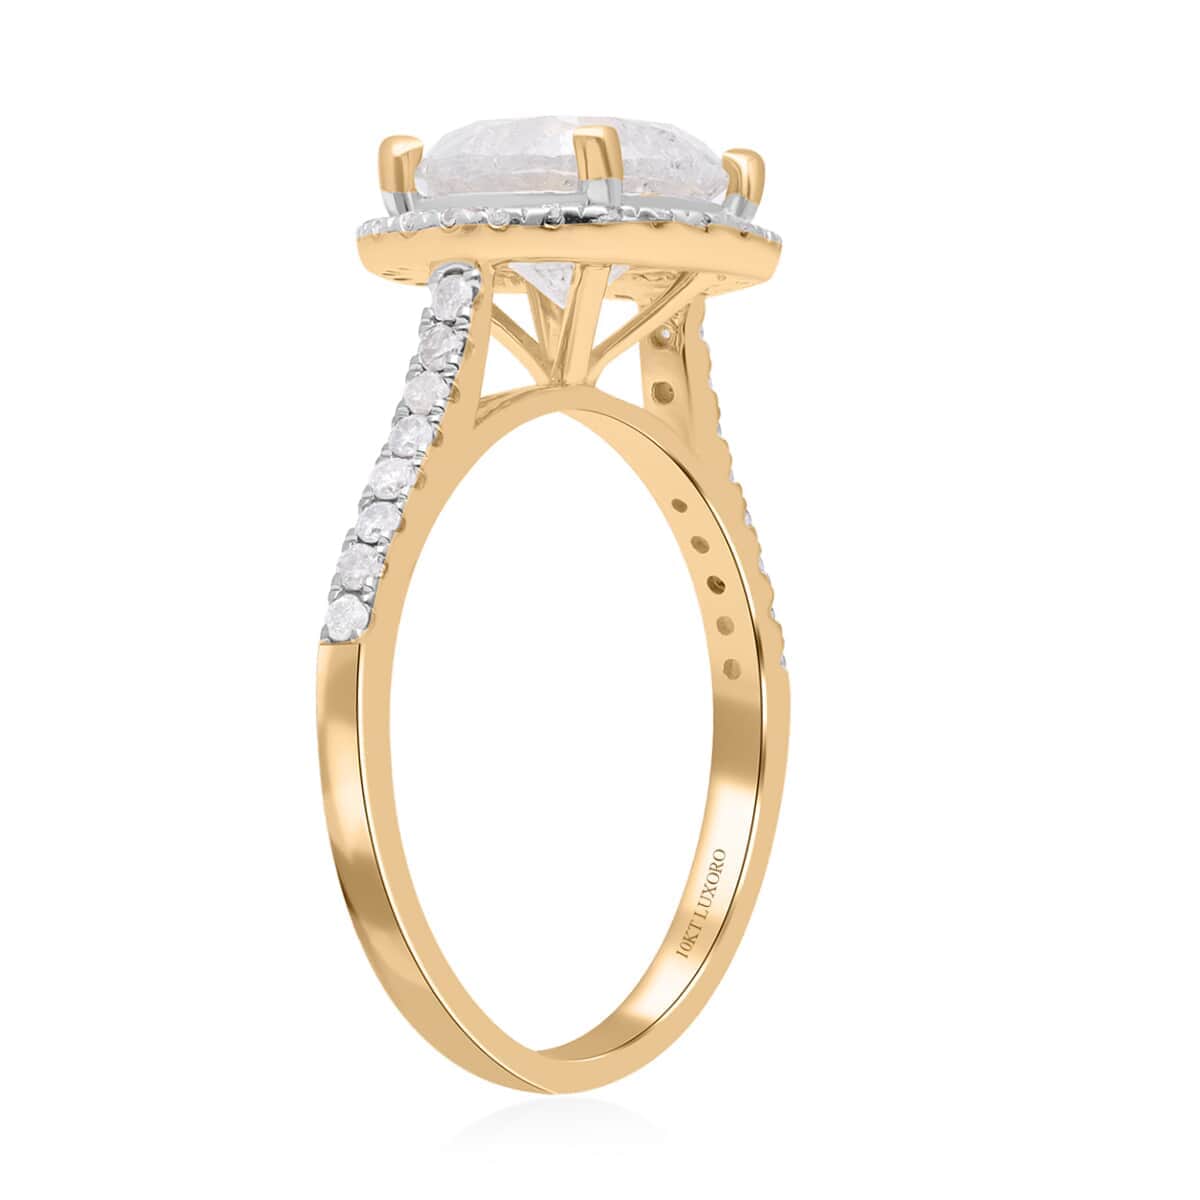 Luxoro 10K Yellow Gold Diamond (G-H, I3) Halo Ring (Size 10.0) 3.50 ctw image number 3